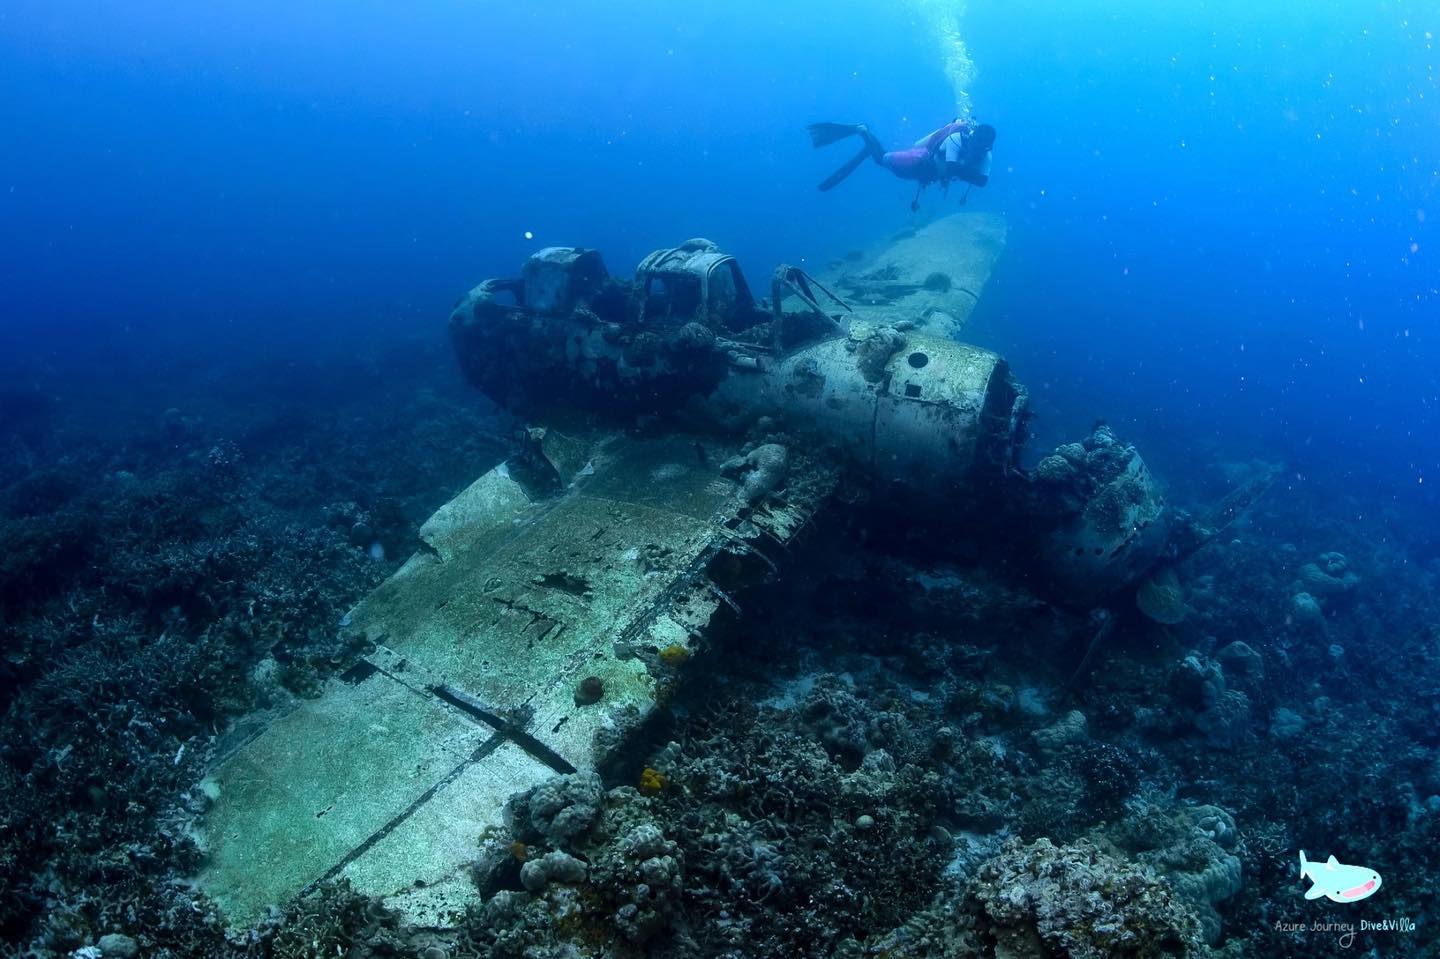 Plane wreck dive site in Palau